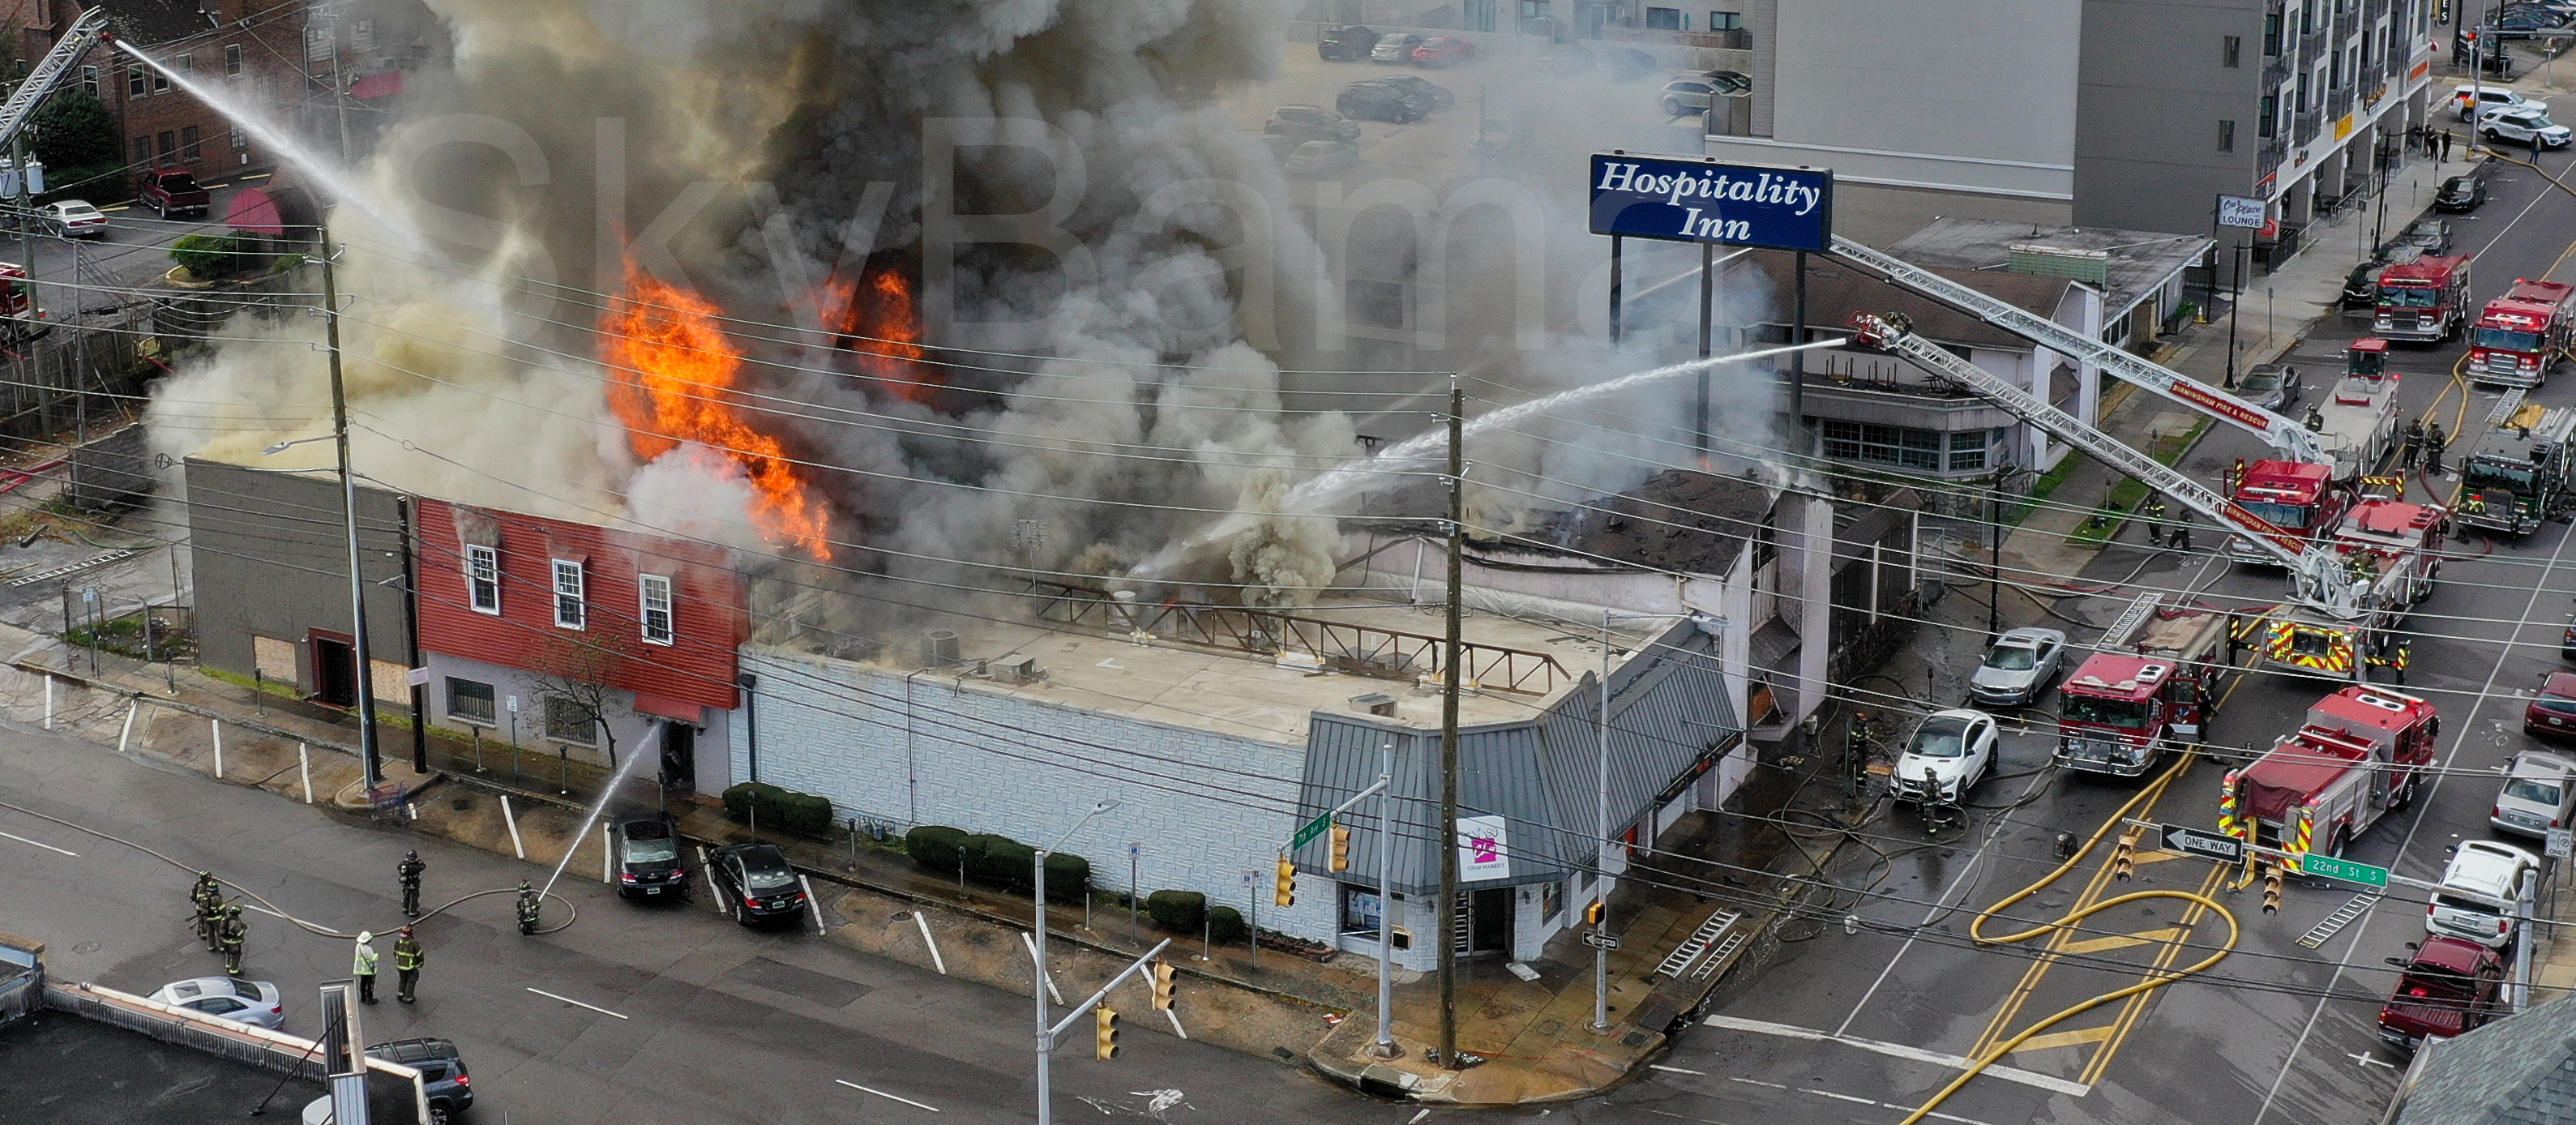 2 Alarm Fire Birmingham at the vacant Hospitality Inn arson suspected.